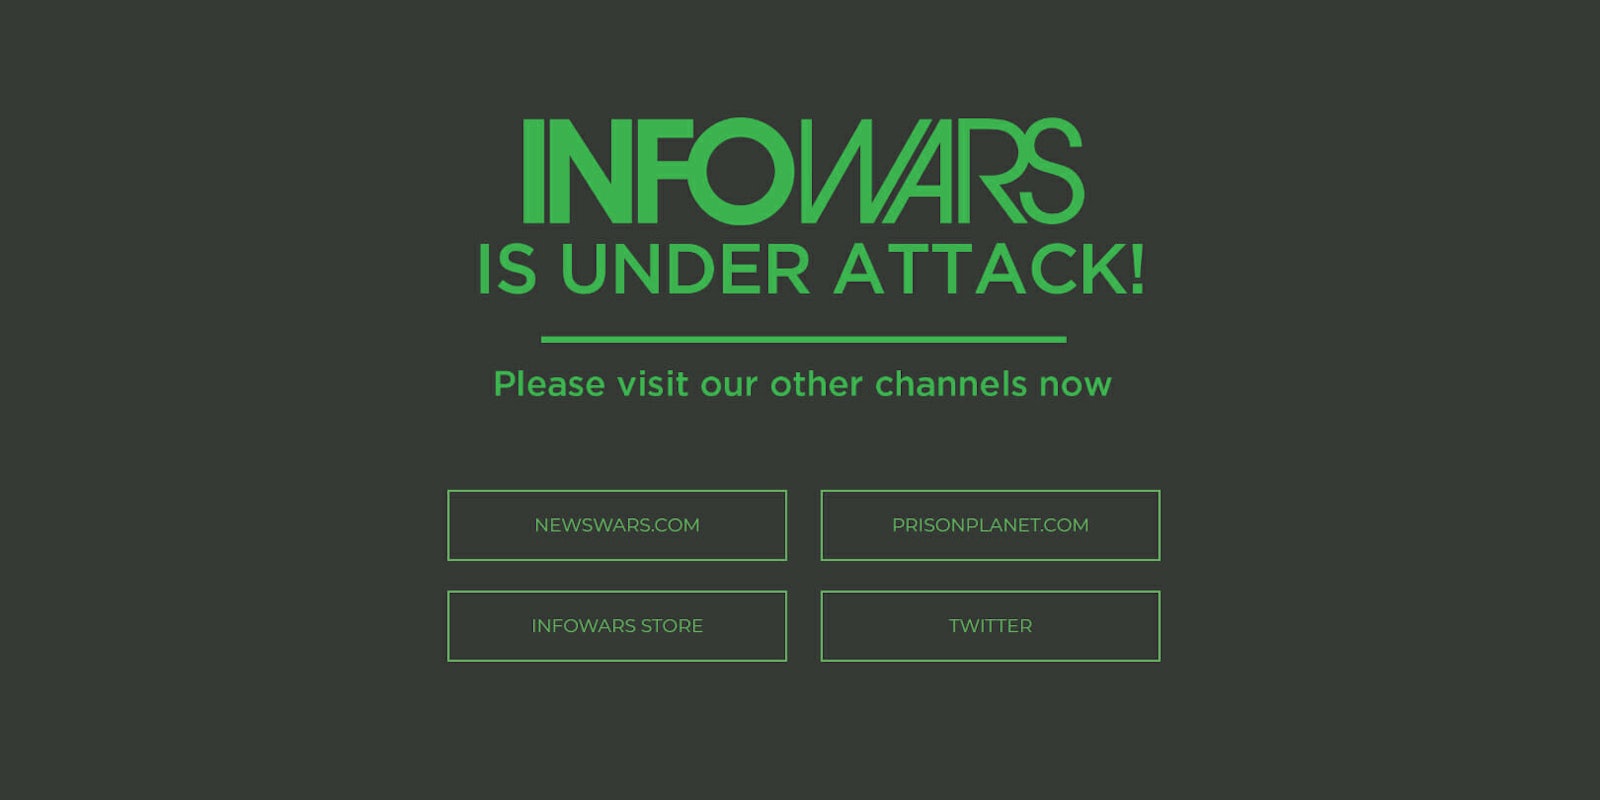 InfoWars website was down on Aug. 14